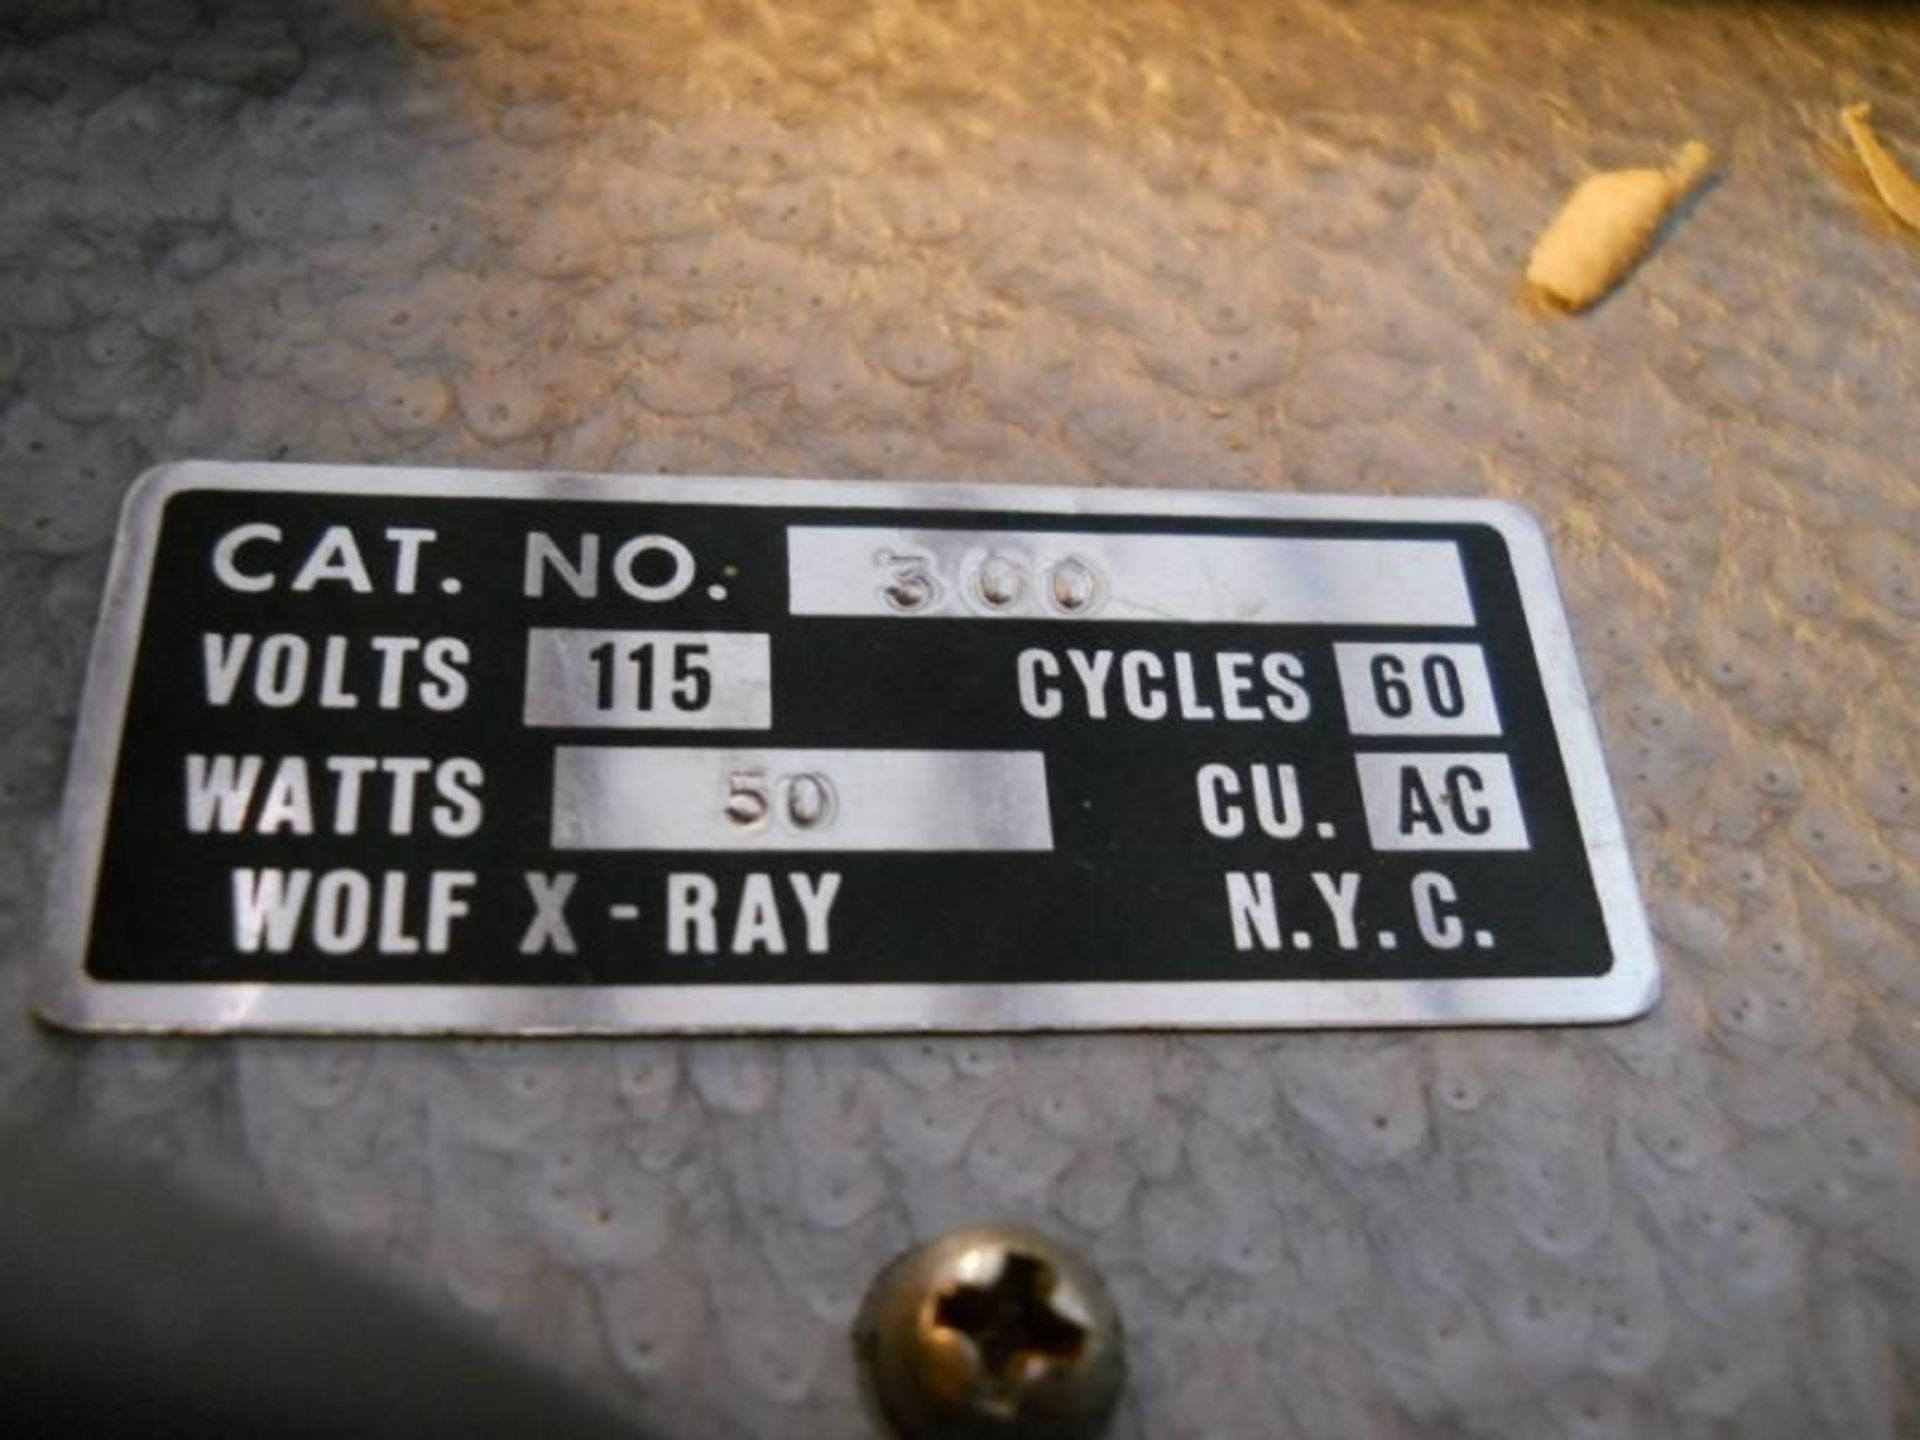 Wolf X-Ray View Box Cat No 300 (Xray Viewer Viewing Light Lamp), Qty 1, 321194535449 - Image 3 of 6